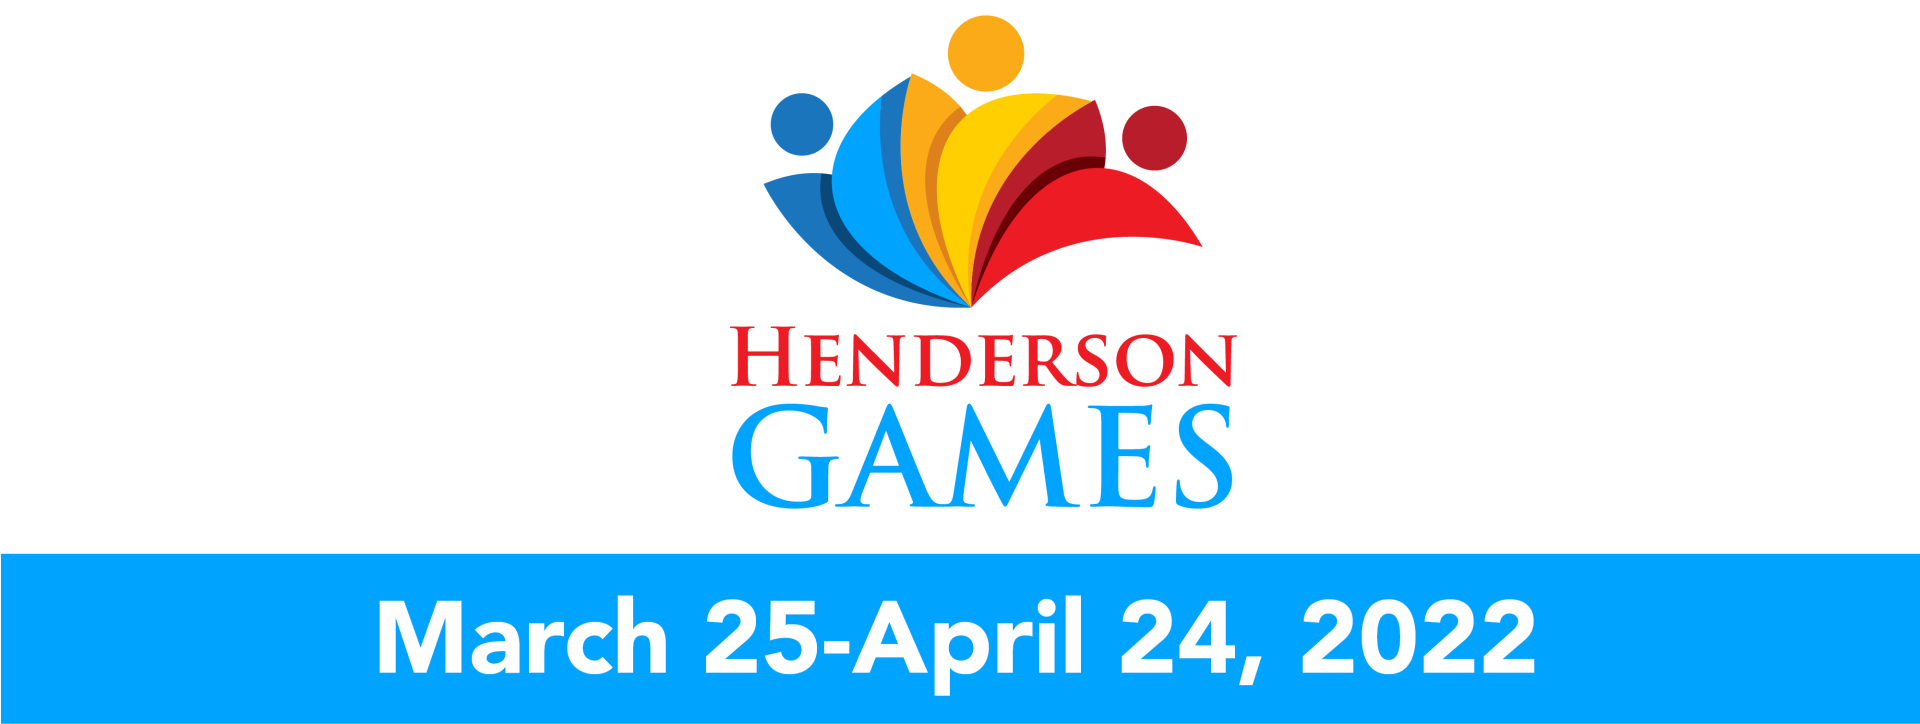 21-798045675 Henderson Games website graphics 1925x725